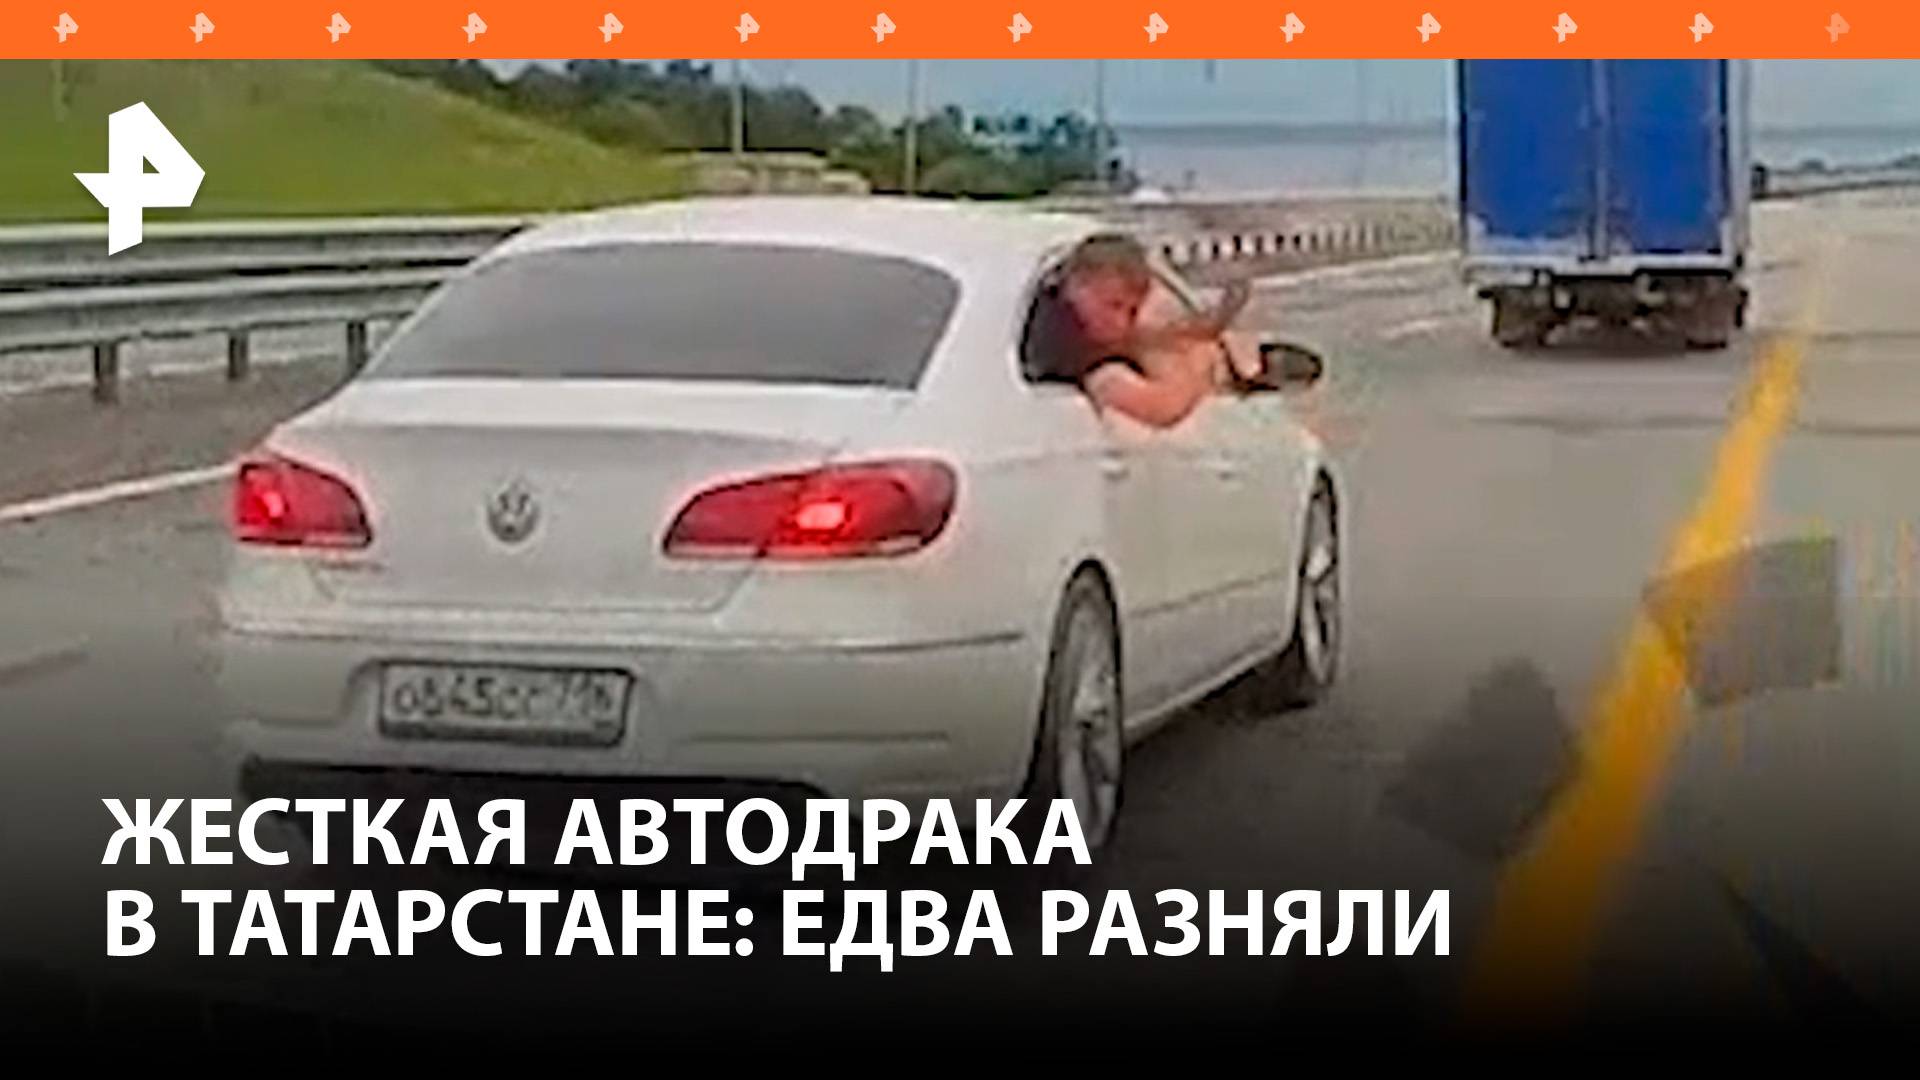 Двое на одного: драка водителей на трассе в Татарстане / РЕН Новости